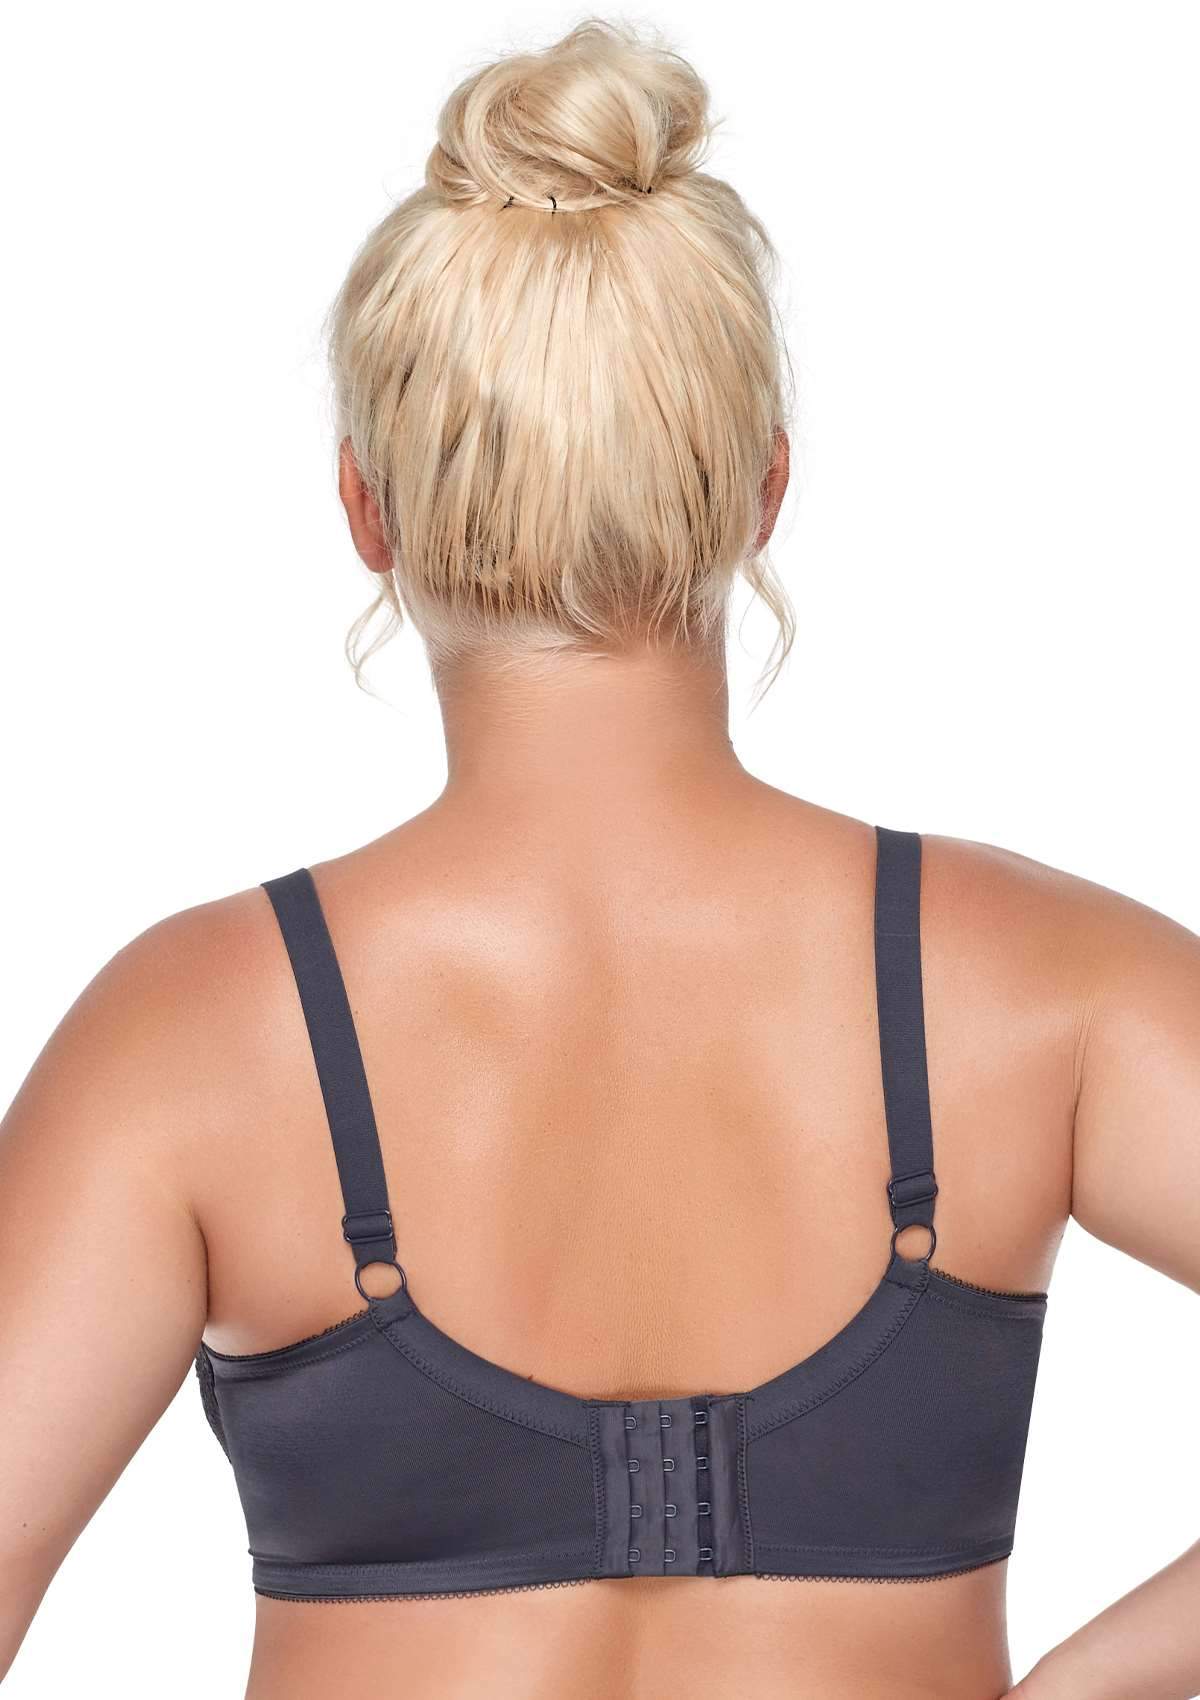 HSIA Enchante Matching Bra And Underwear Sets: Uplift Big Boobs Bra - Dark Gray / 40 / C